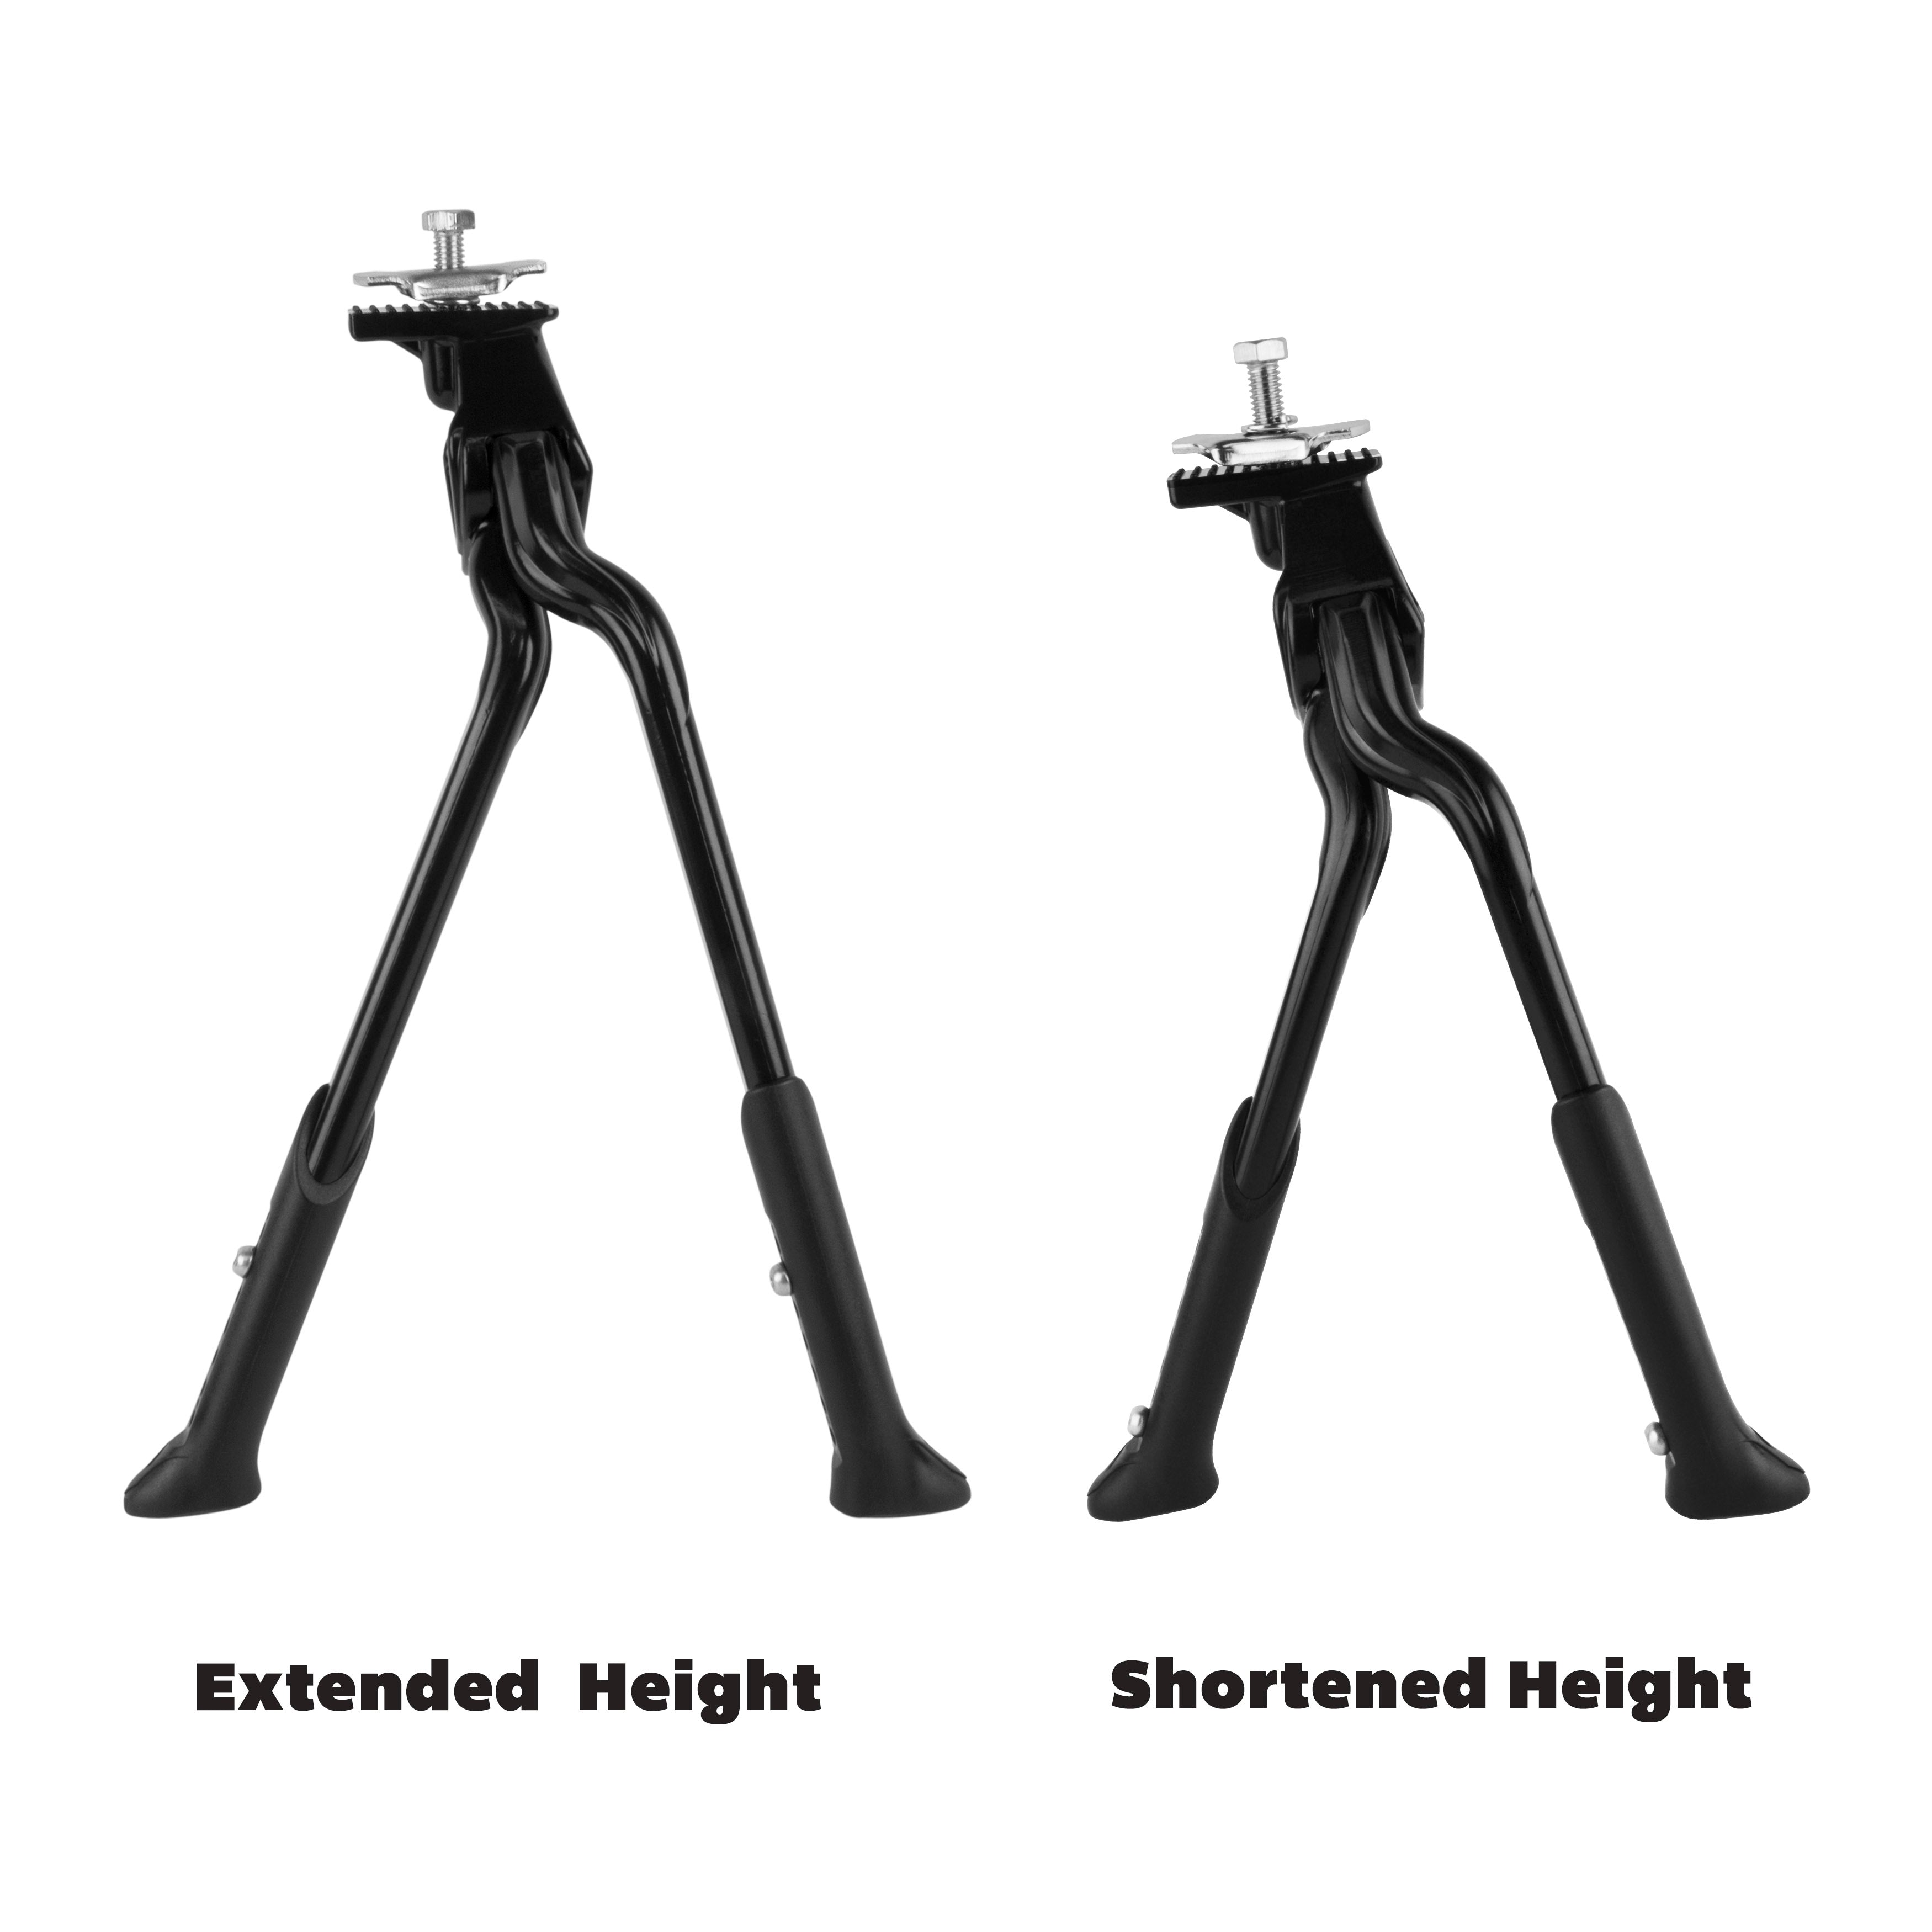 Adjustable foldable double-leg kickstand